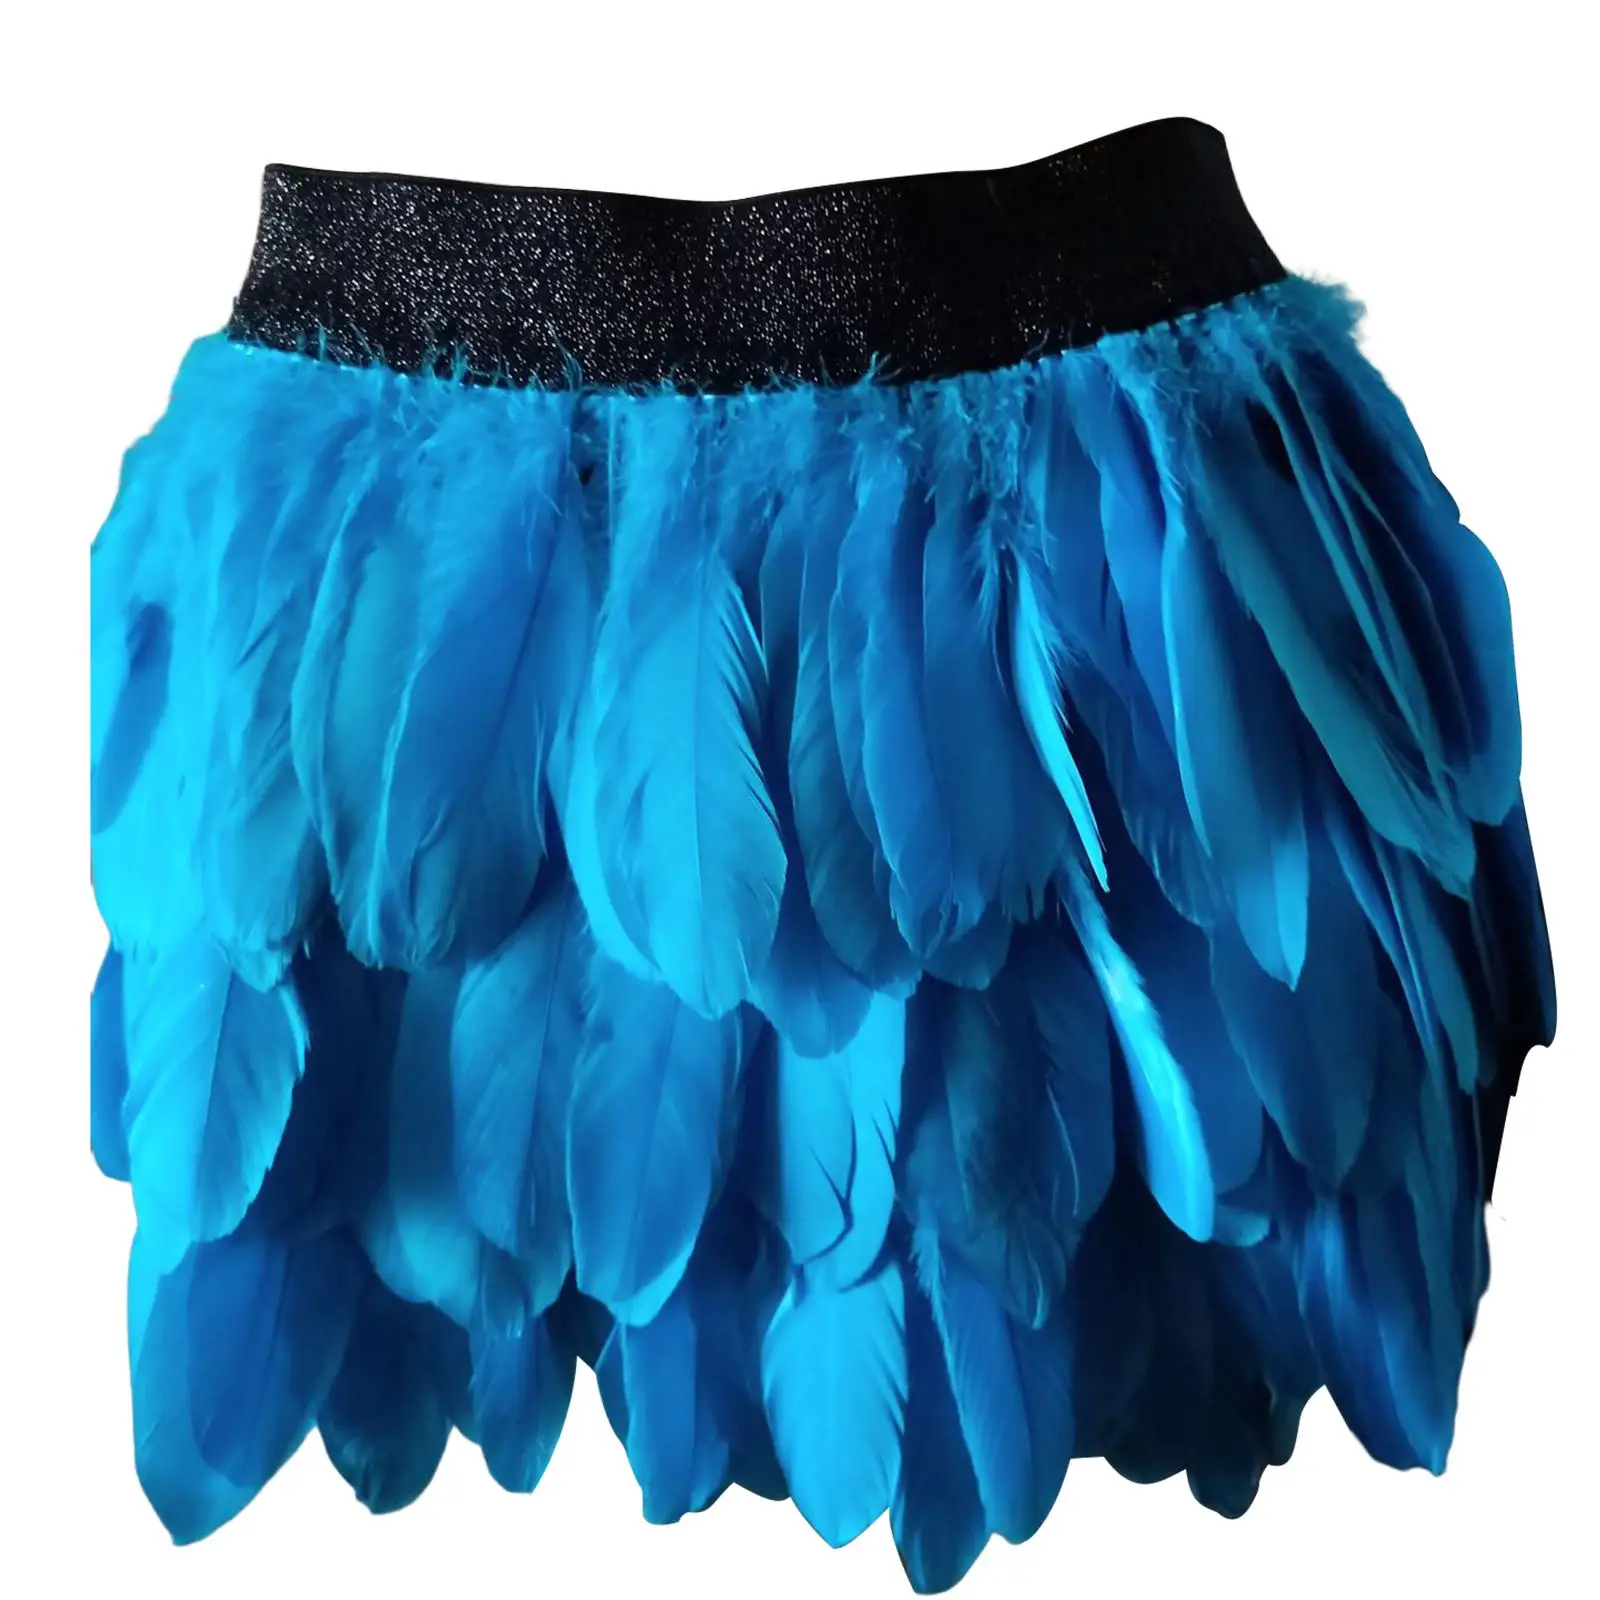 Mini Feathers Skirt Women Short Skirt Adjustable Waist Elastic Fringe Fashion Casual Dance for Festival Wedding